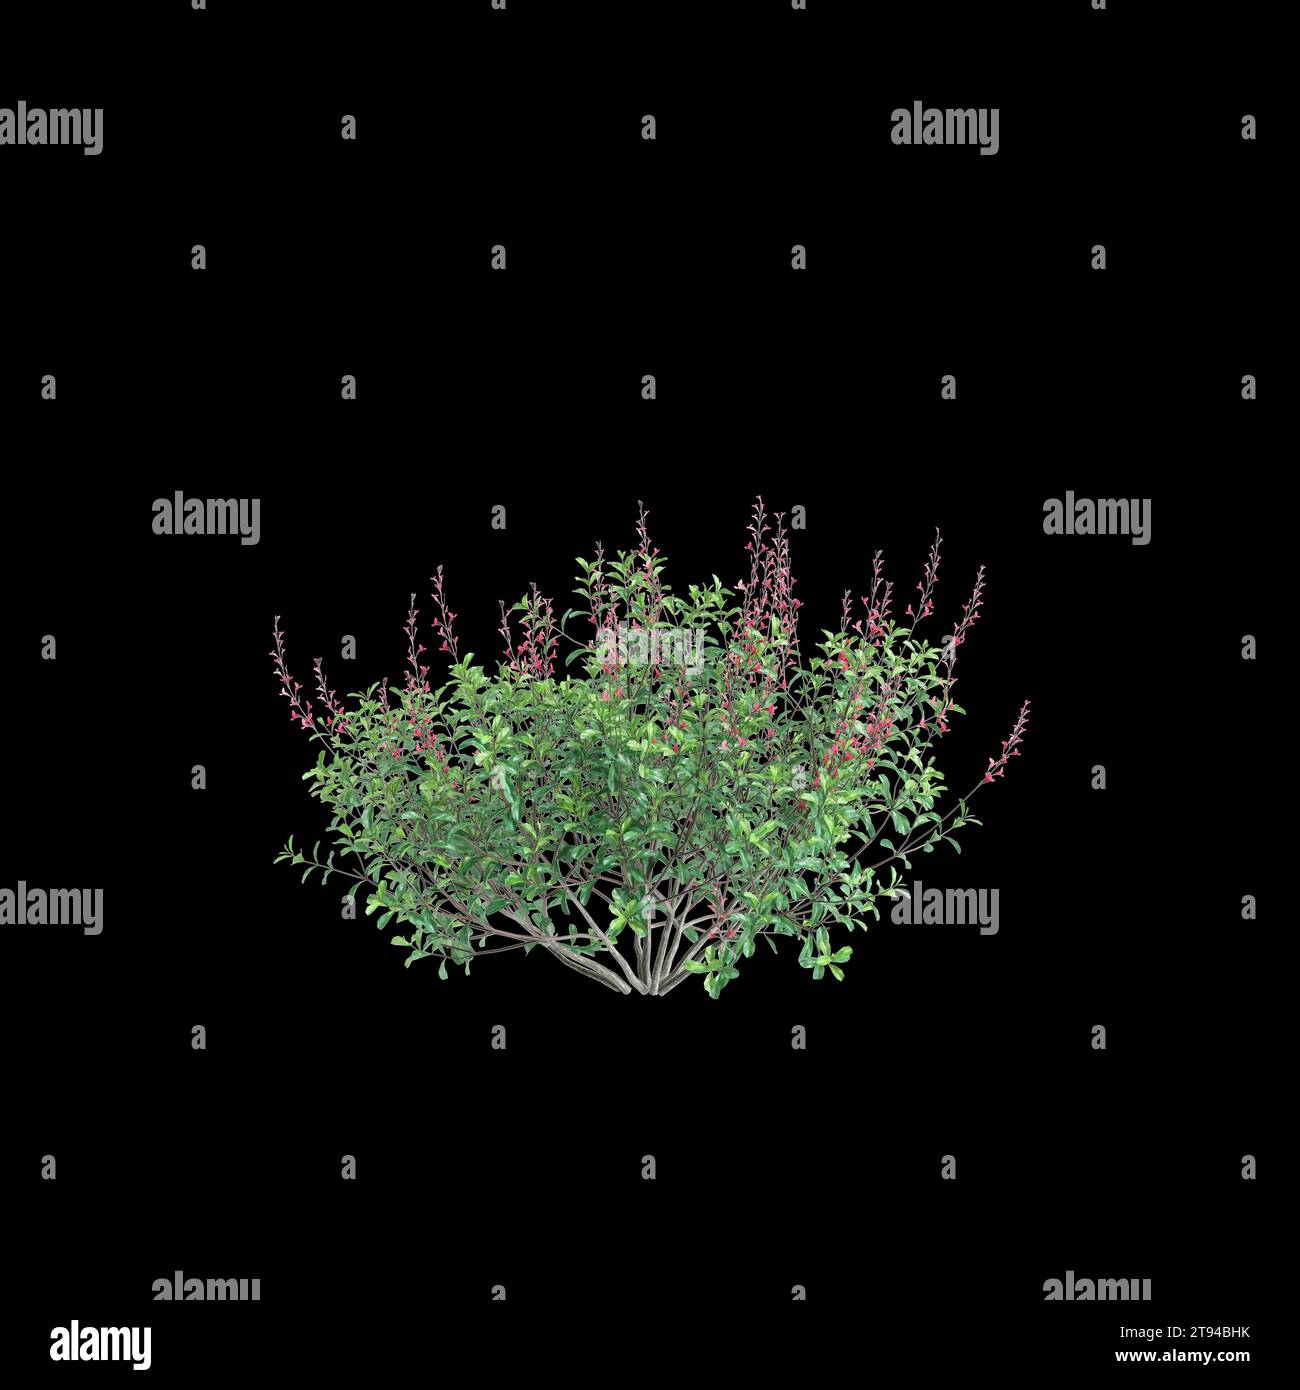 3d illustration of Salvia greggii bush isolated black background Stock Photo